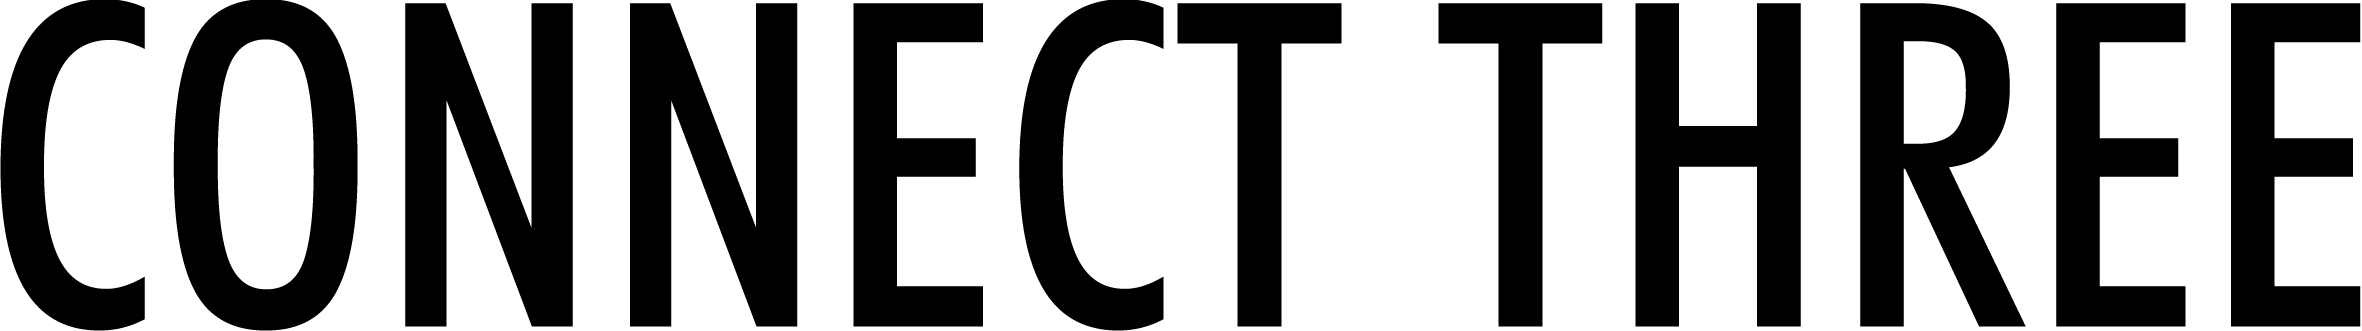 Company logo image - Connect Three